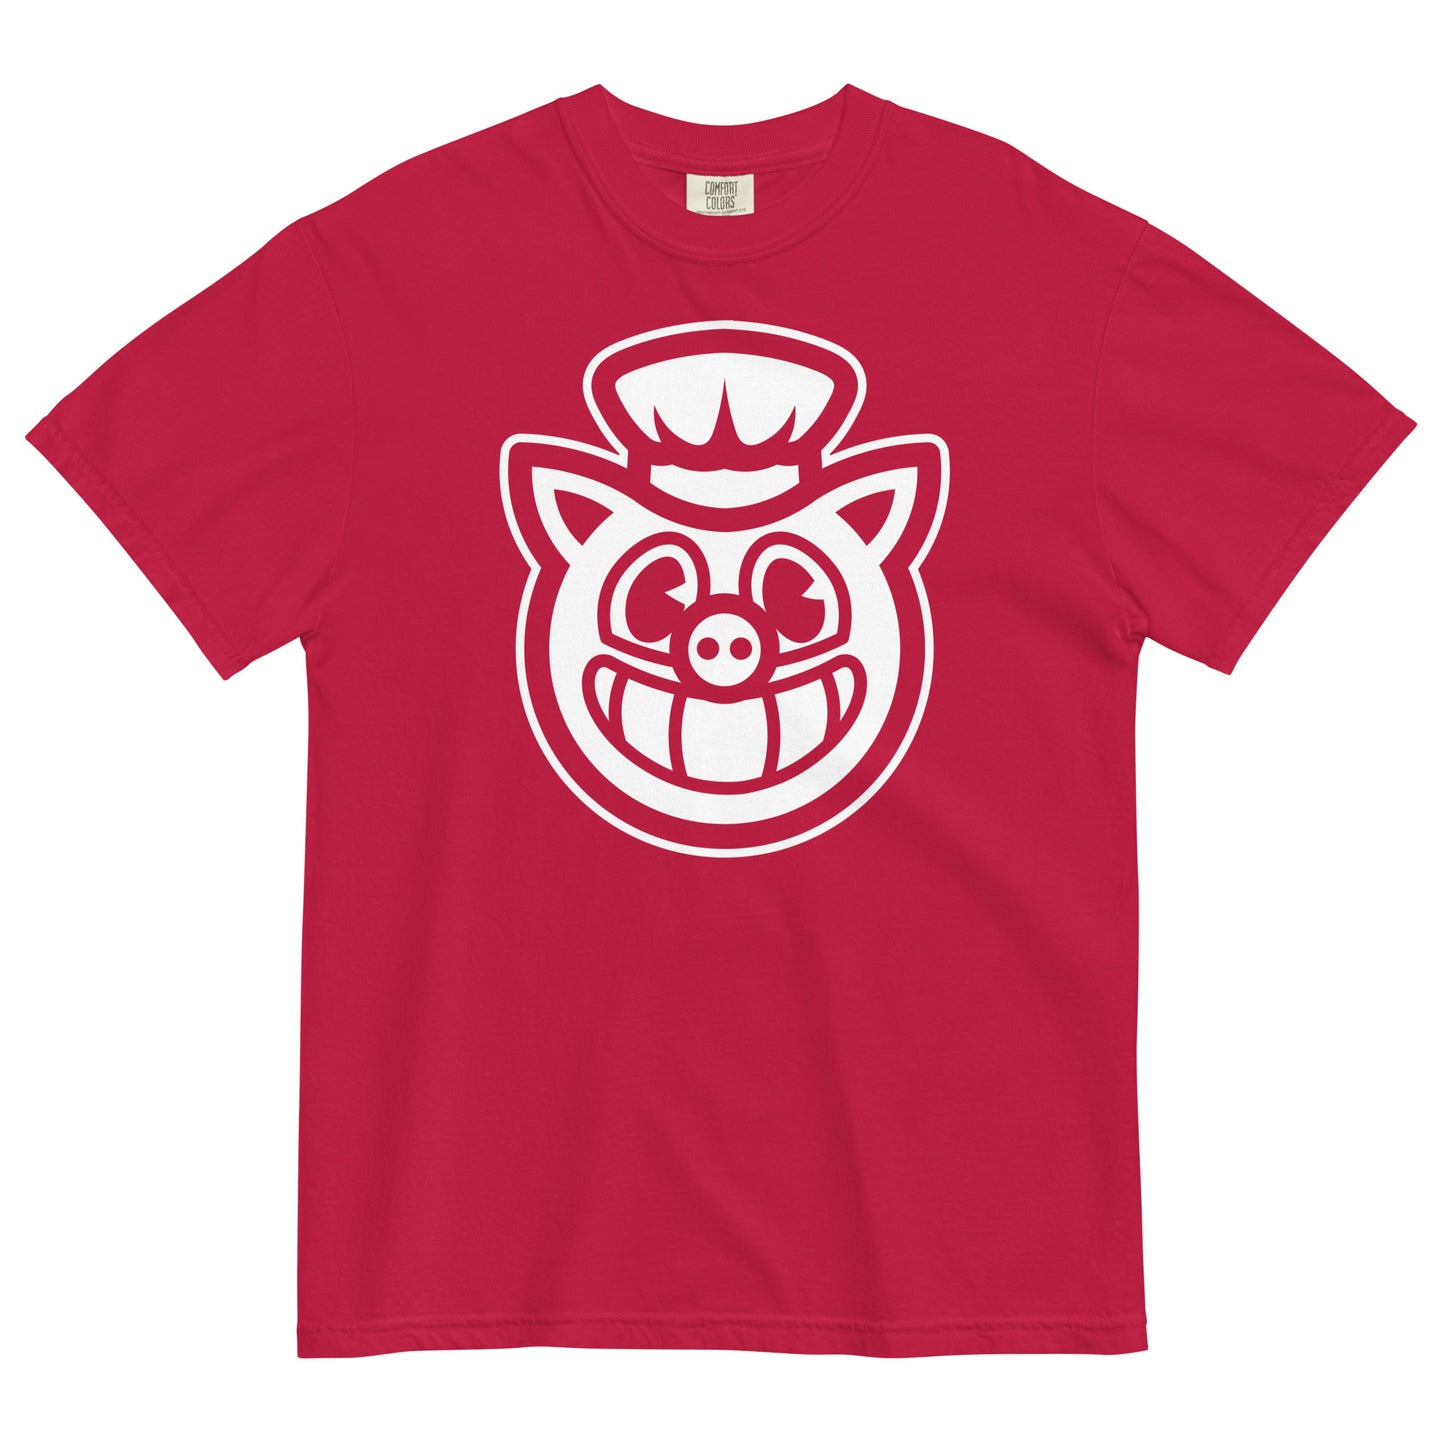 Lil' Harry's BBQ Pig Unisex T-Shirt